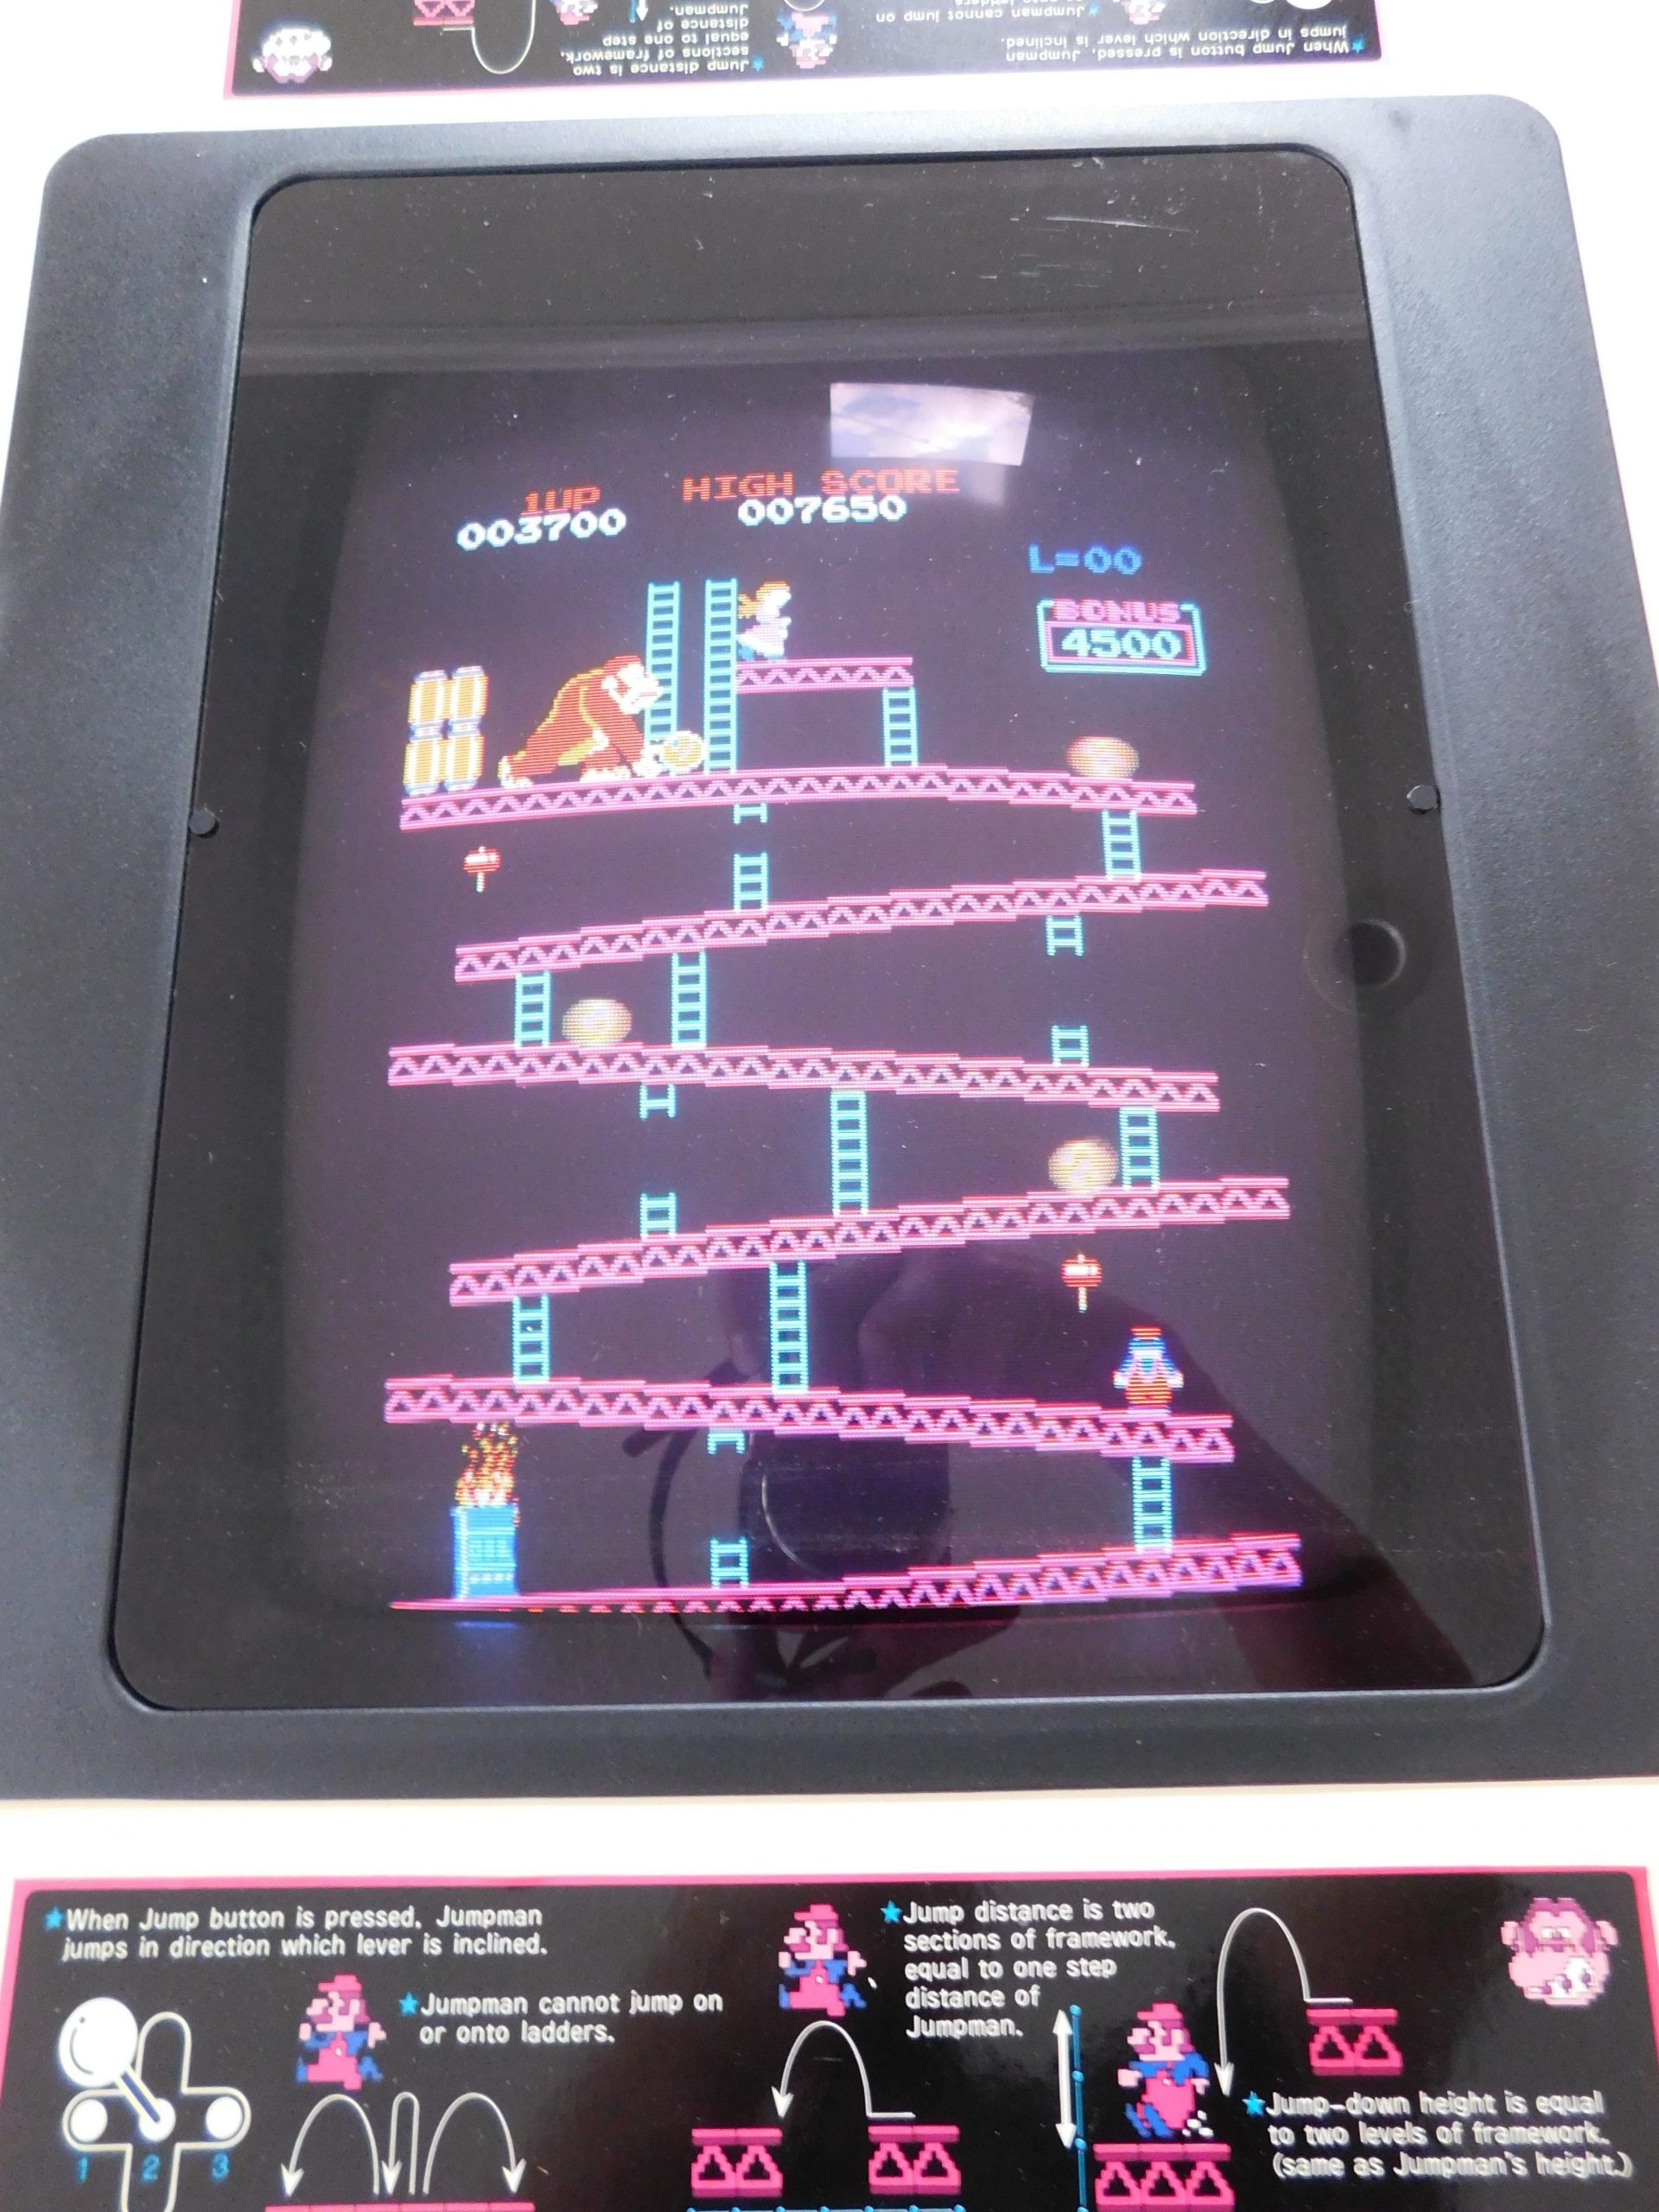 Nintendo Donkey Kong Cocktail Arcade Game